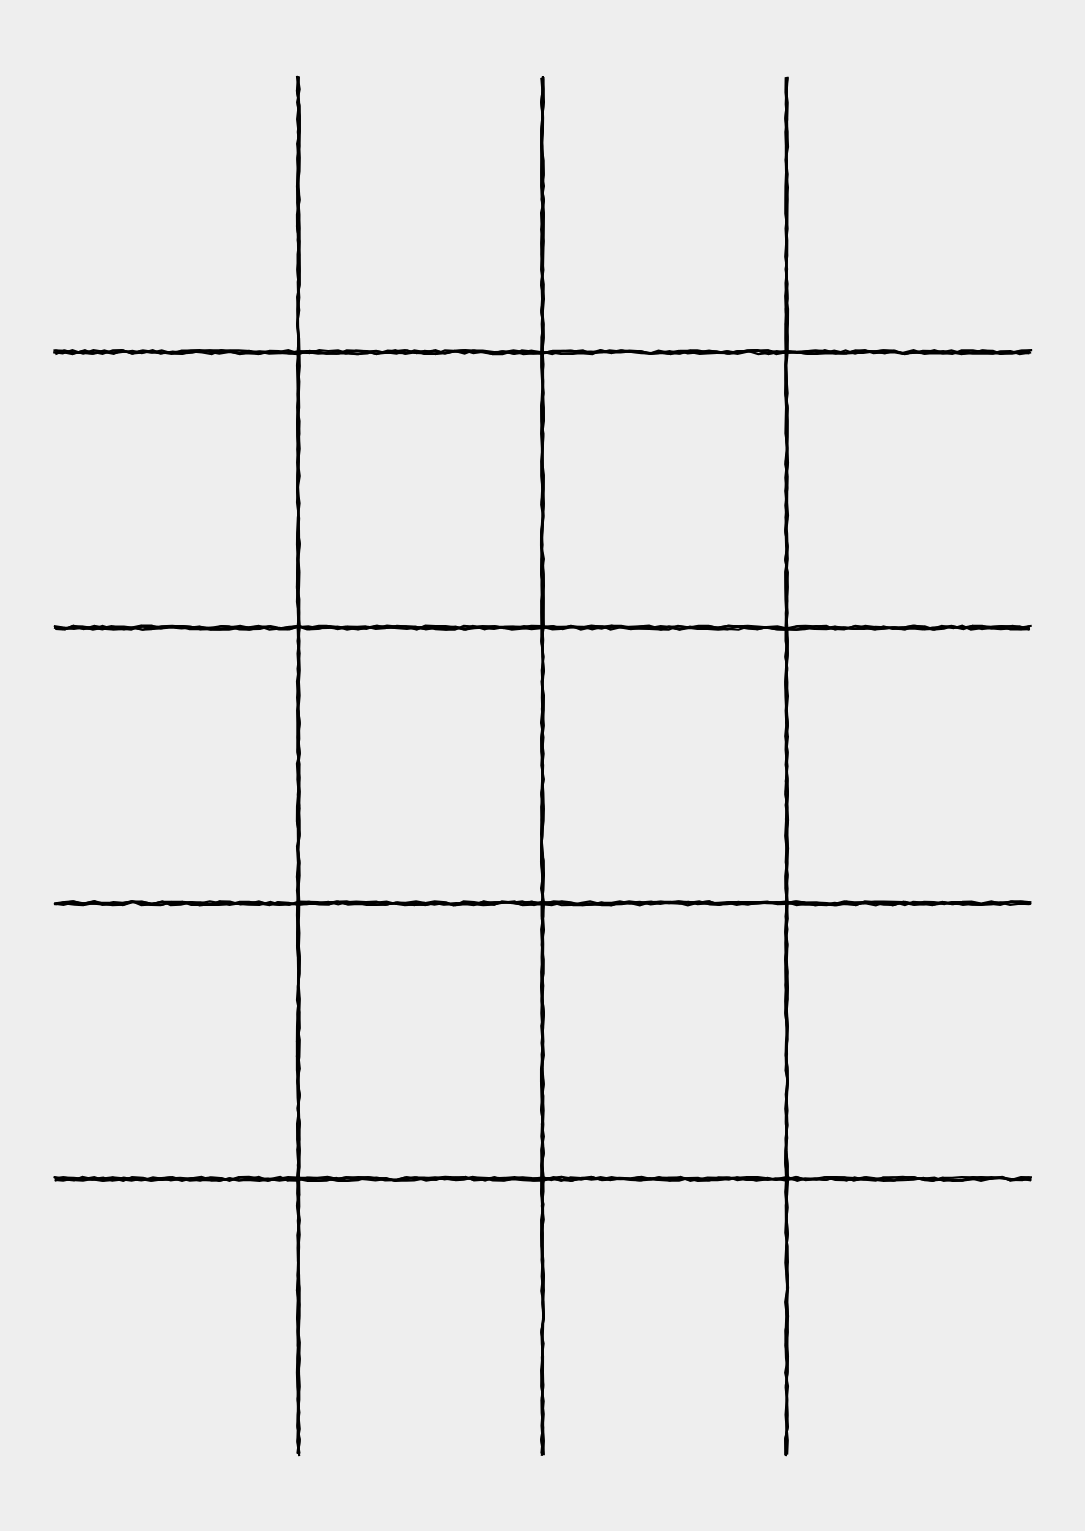 3 by 4 grid